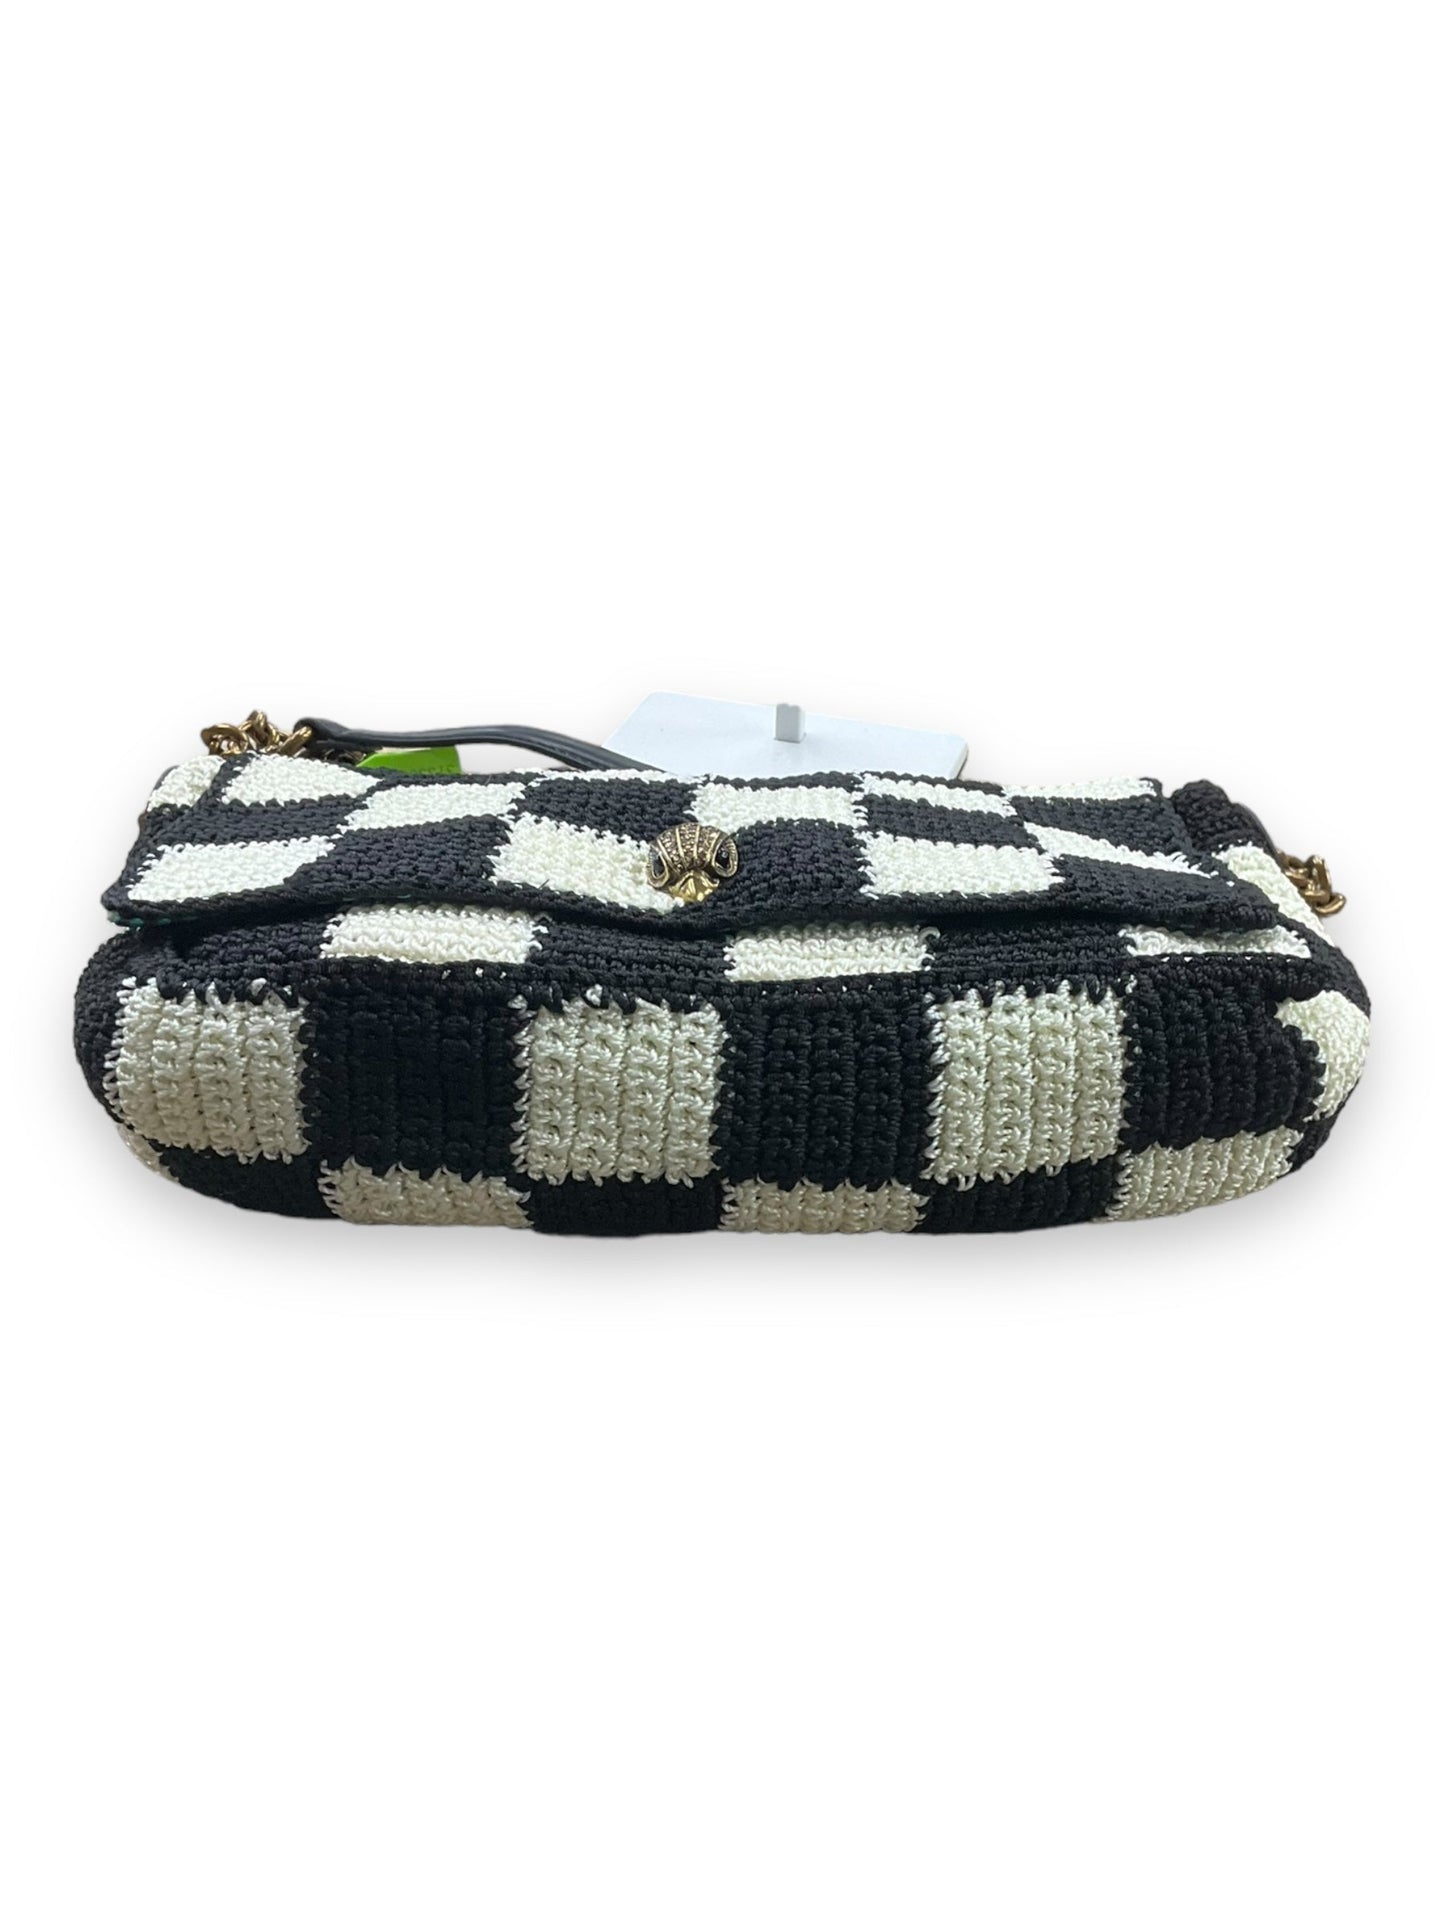 Handbag Designer By Kurt Geiger  Size: Medium